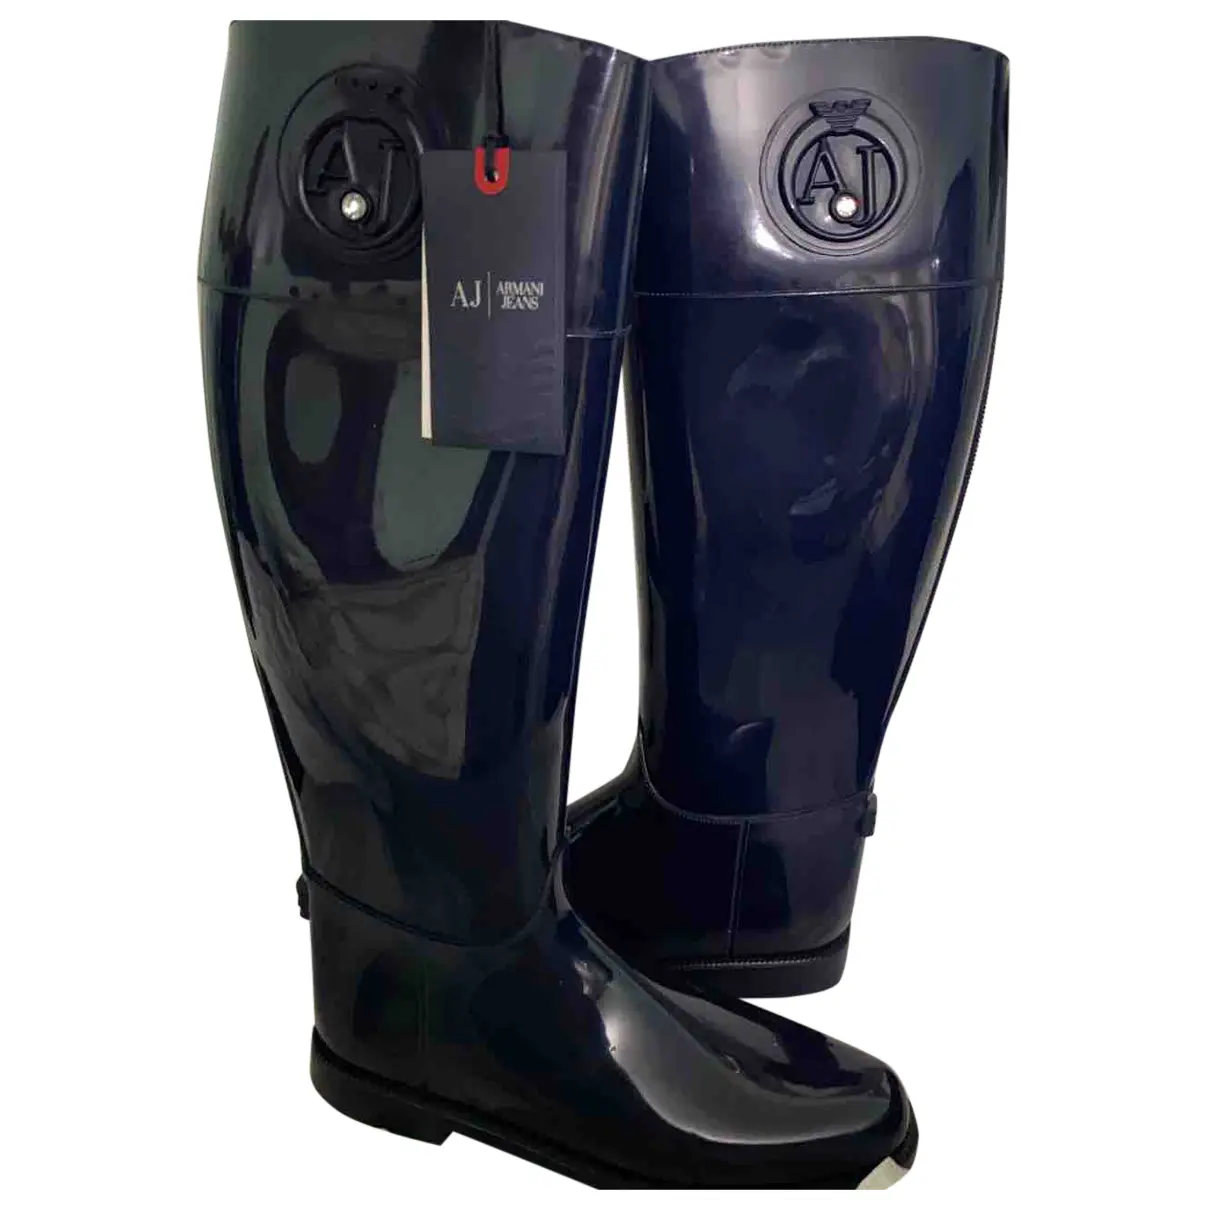 Patent leather wellington boots Armani Jeans